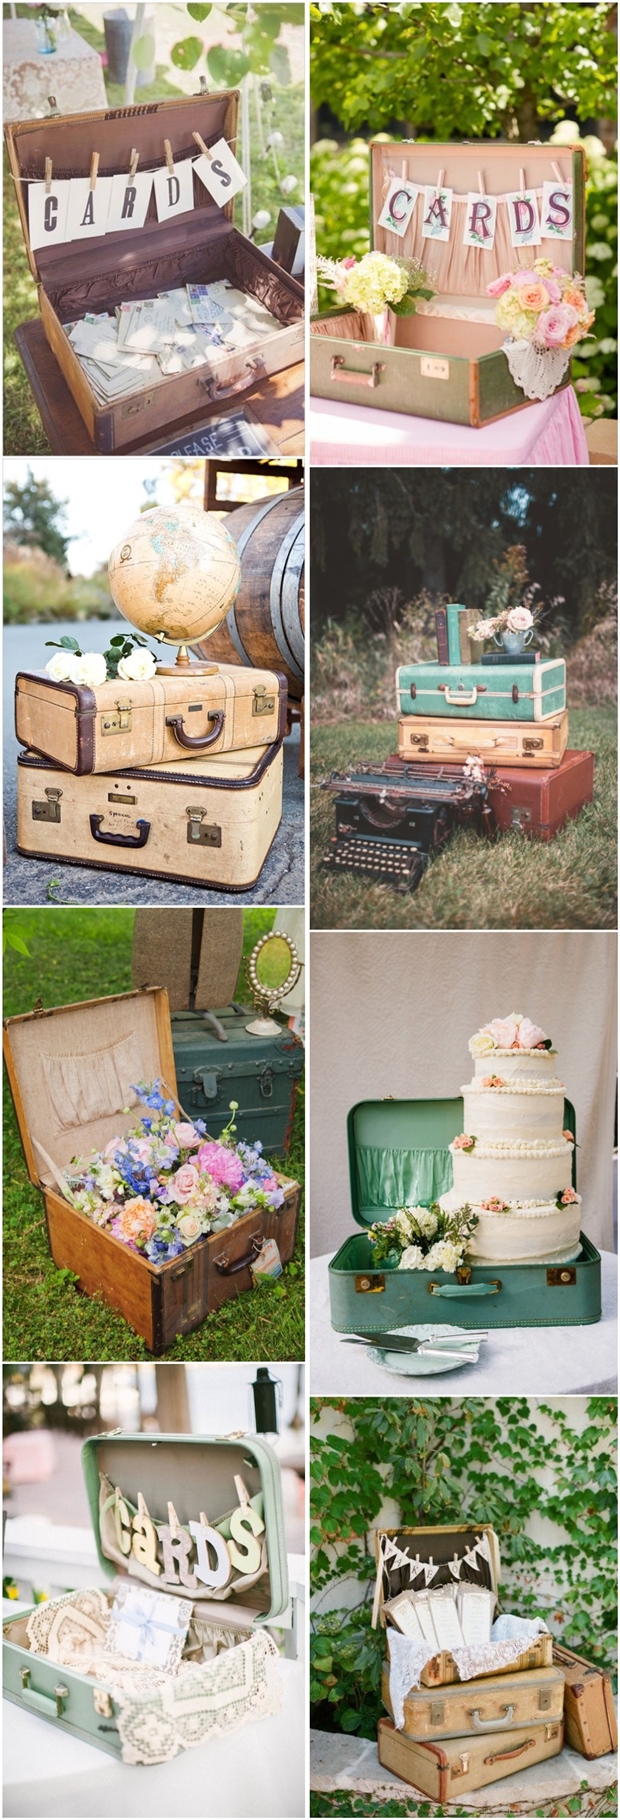 vintage suitcase wedding decor ideas